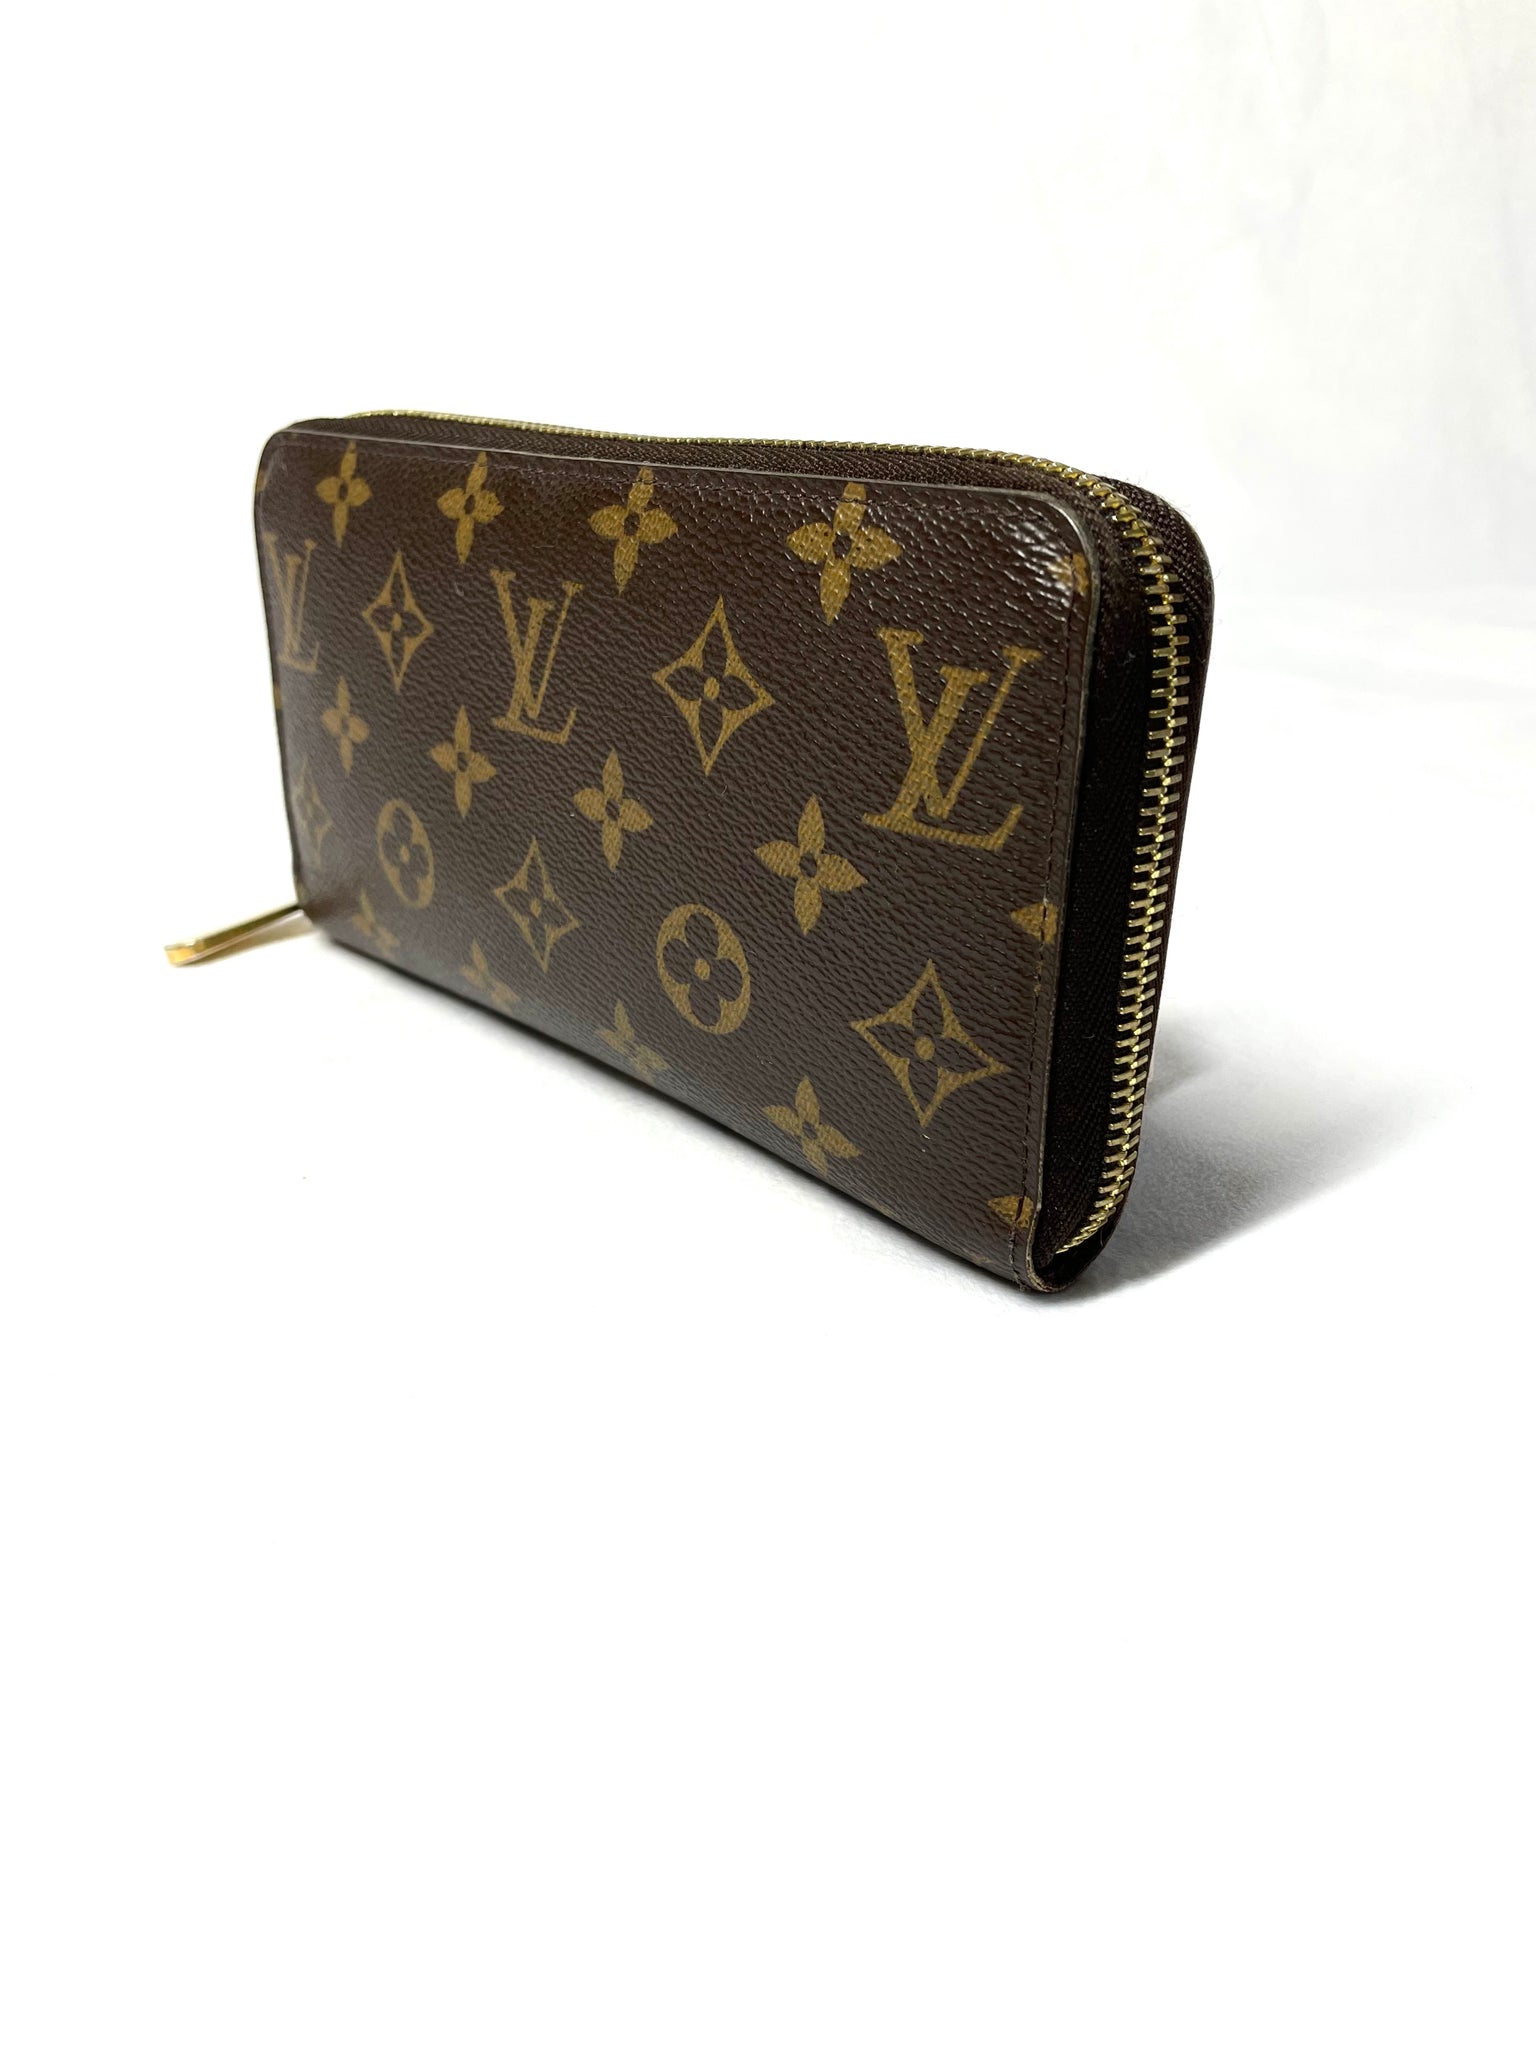 Louis Vuitton - Zippy Wallet - Monogram Canvas - Pre Loved